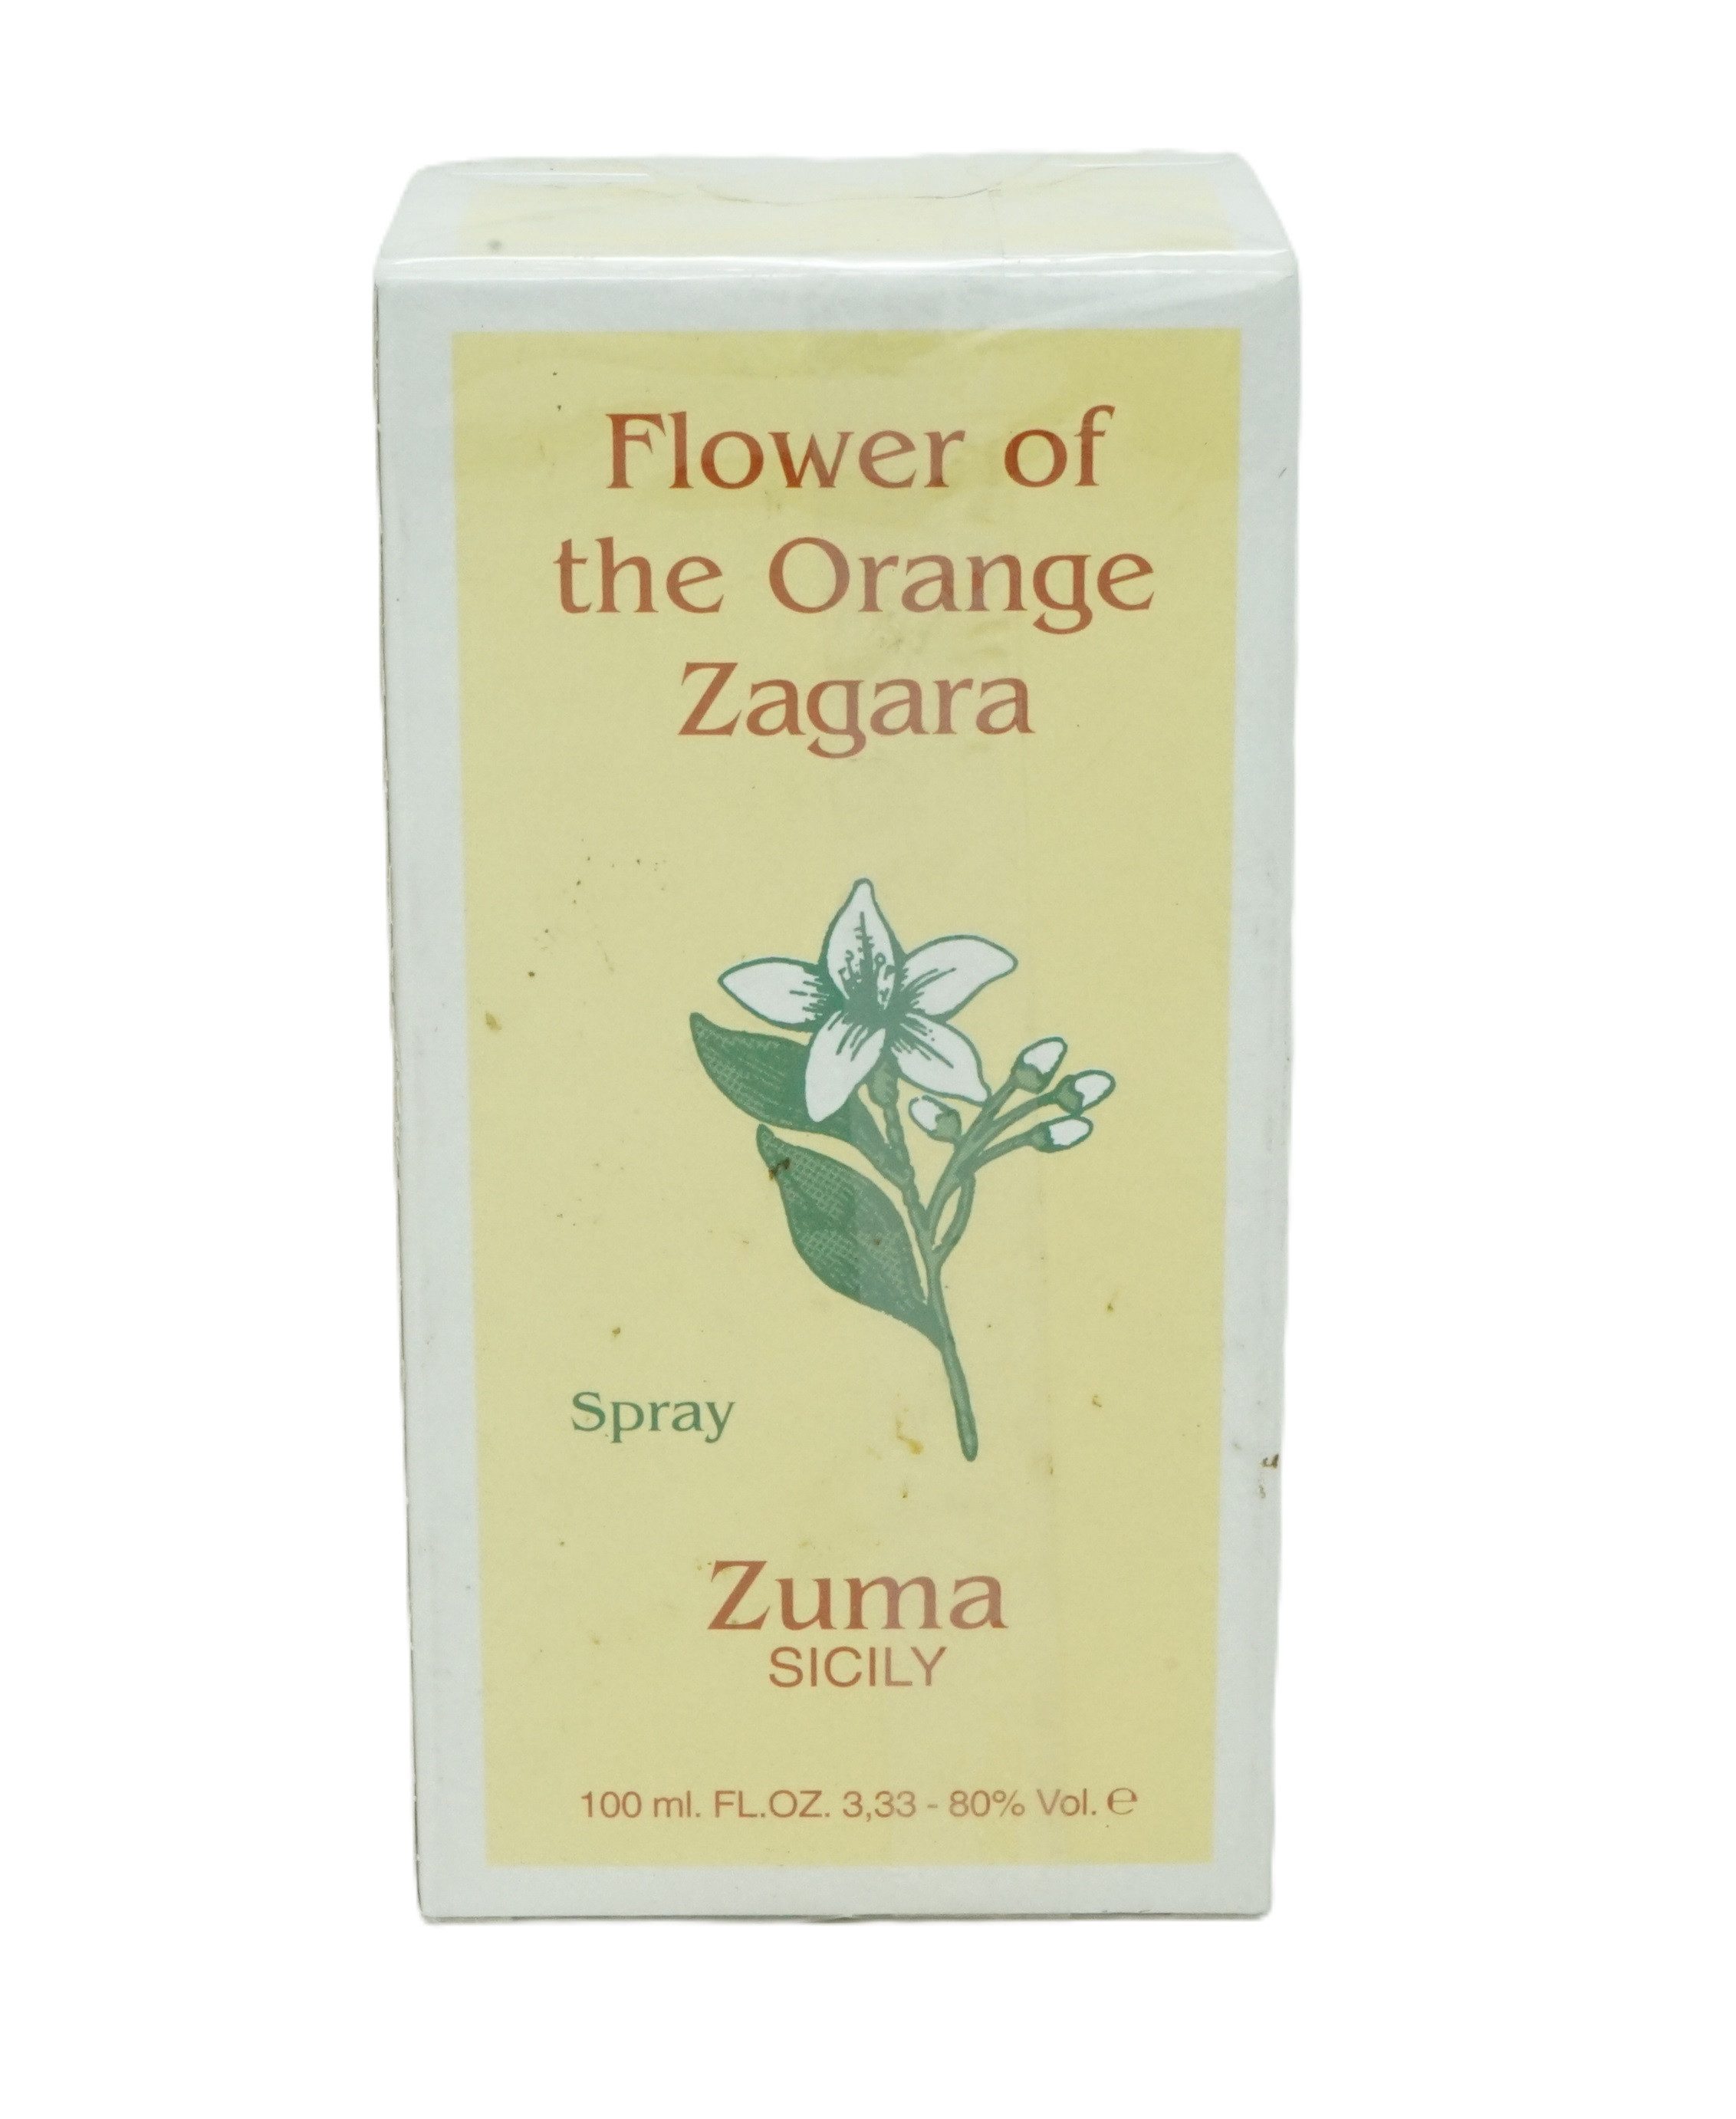 ZADIG & VOLTAIRE Duft-Set Zuma Sicily FLower of the Orange Zagara 100ml